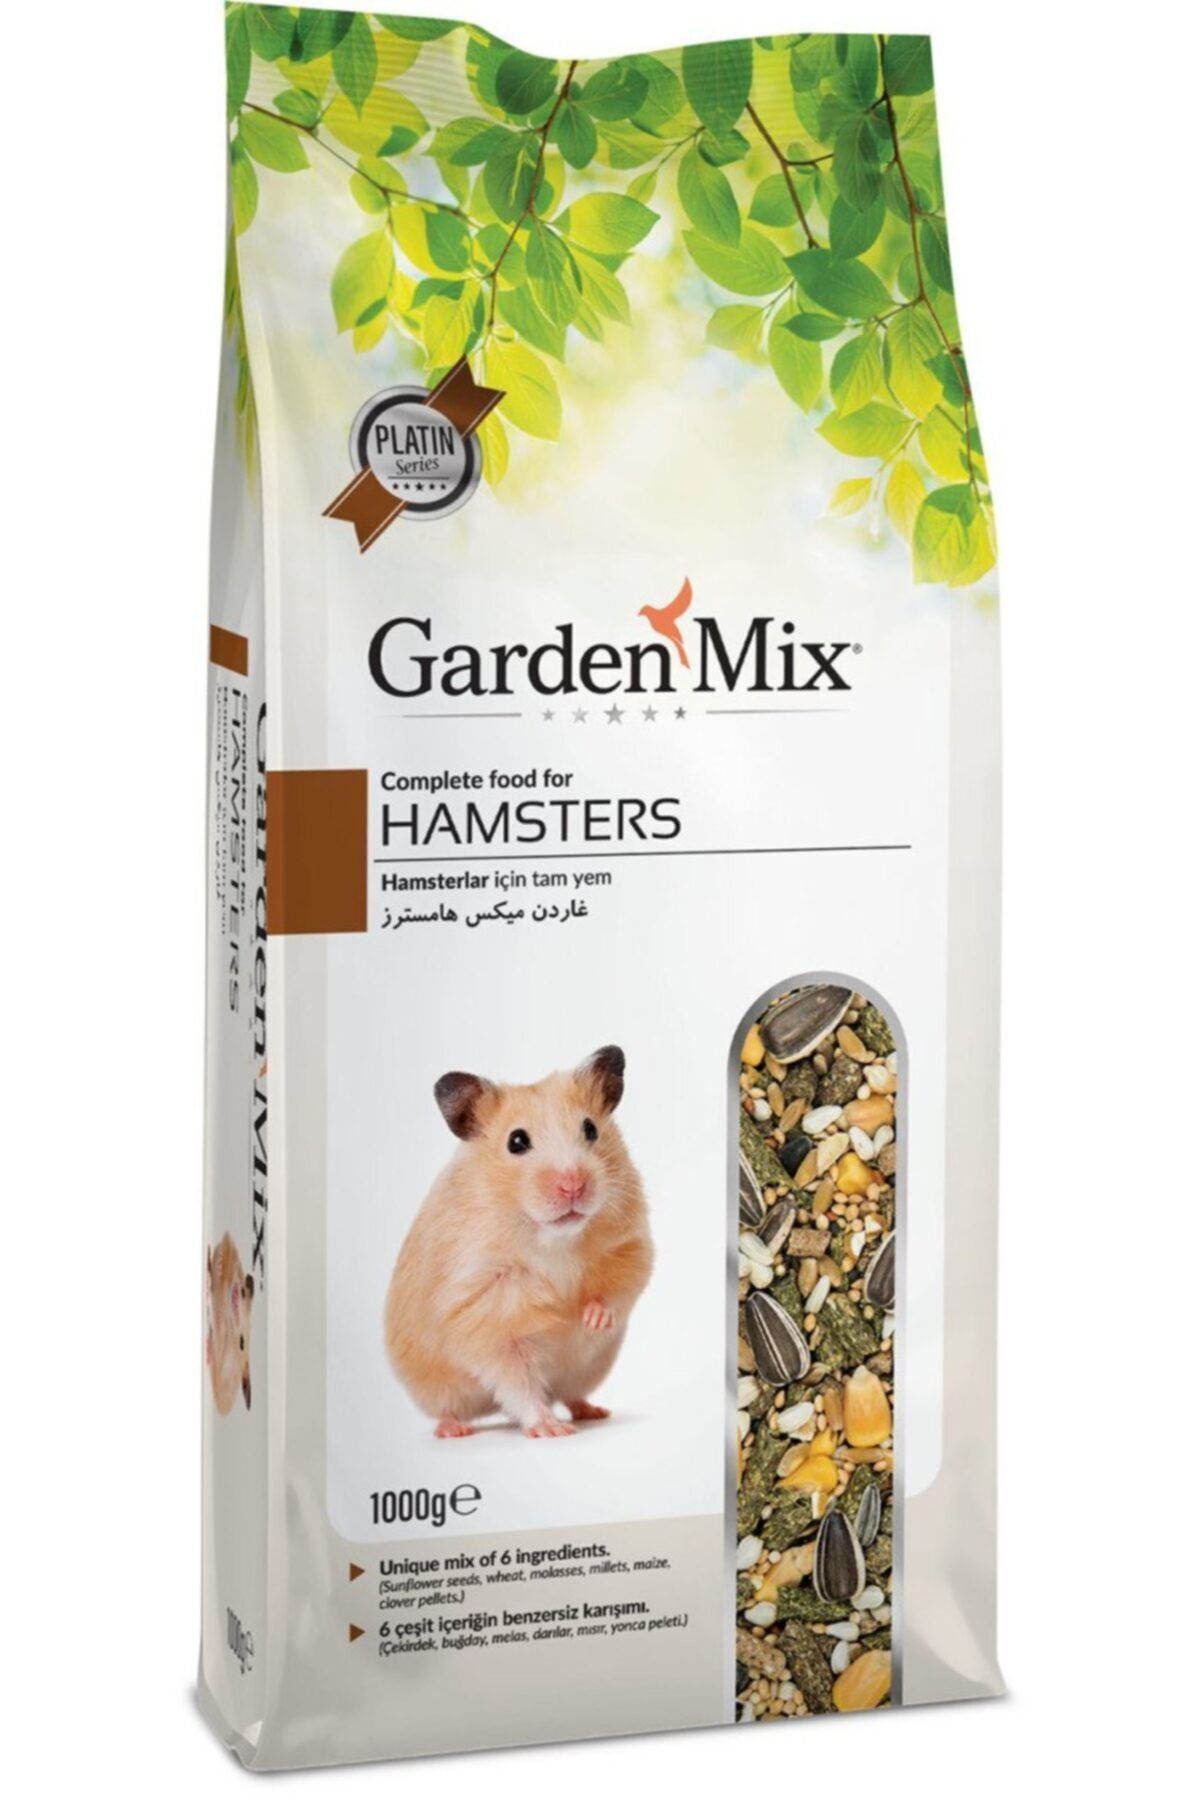 Gardenmix Platin Hamster Yemi 1kg 125072